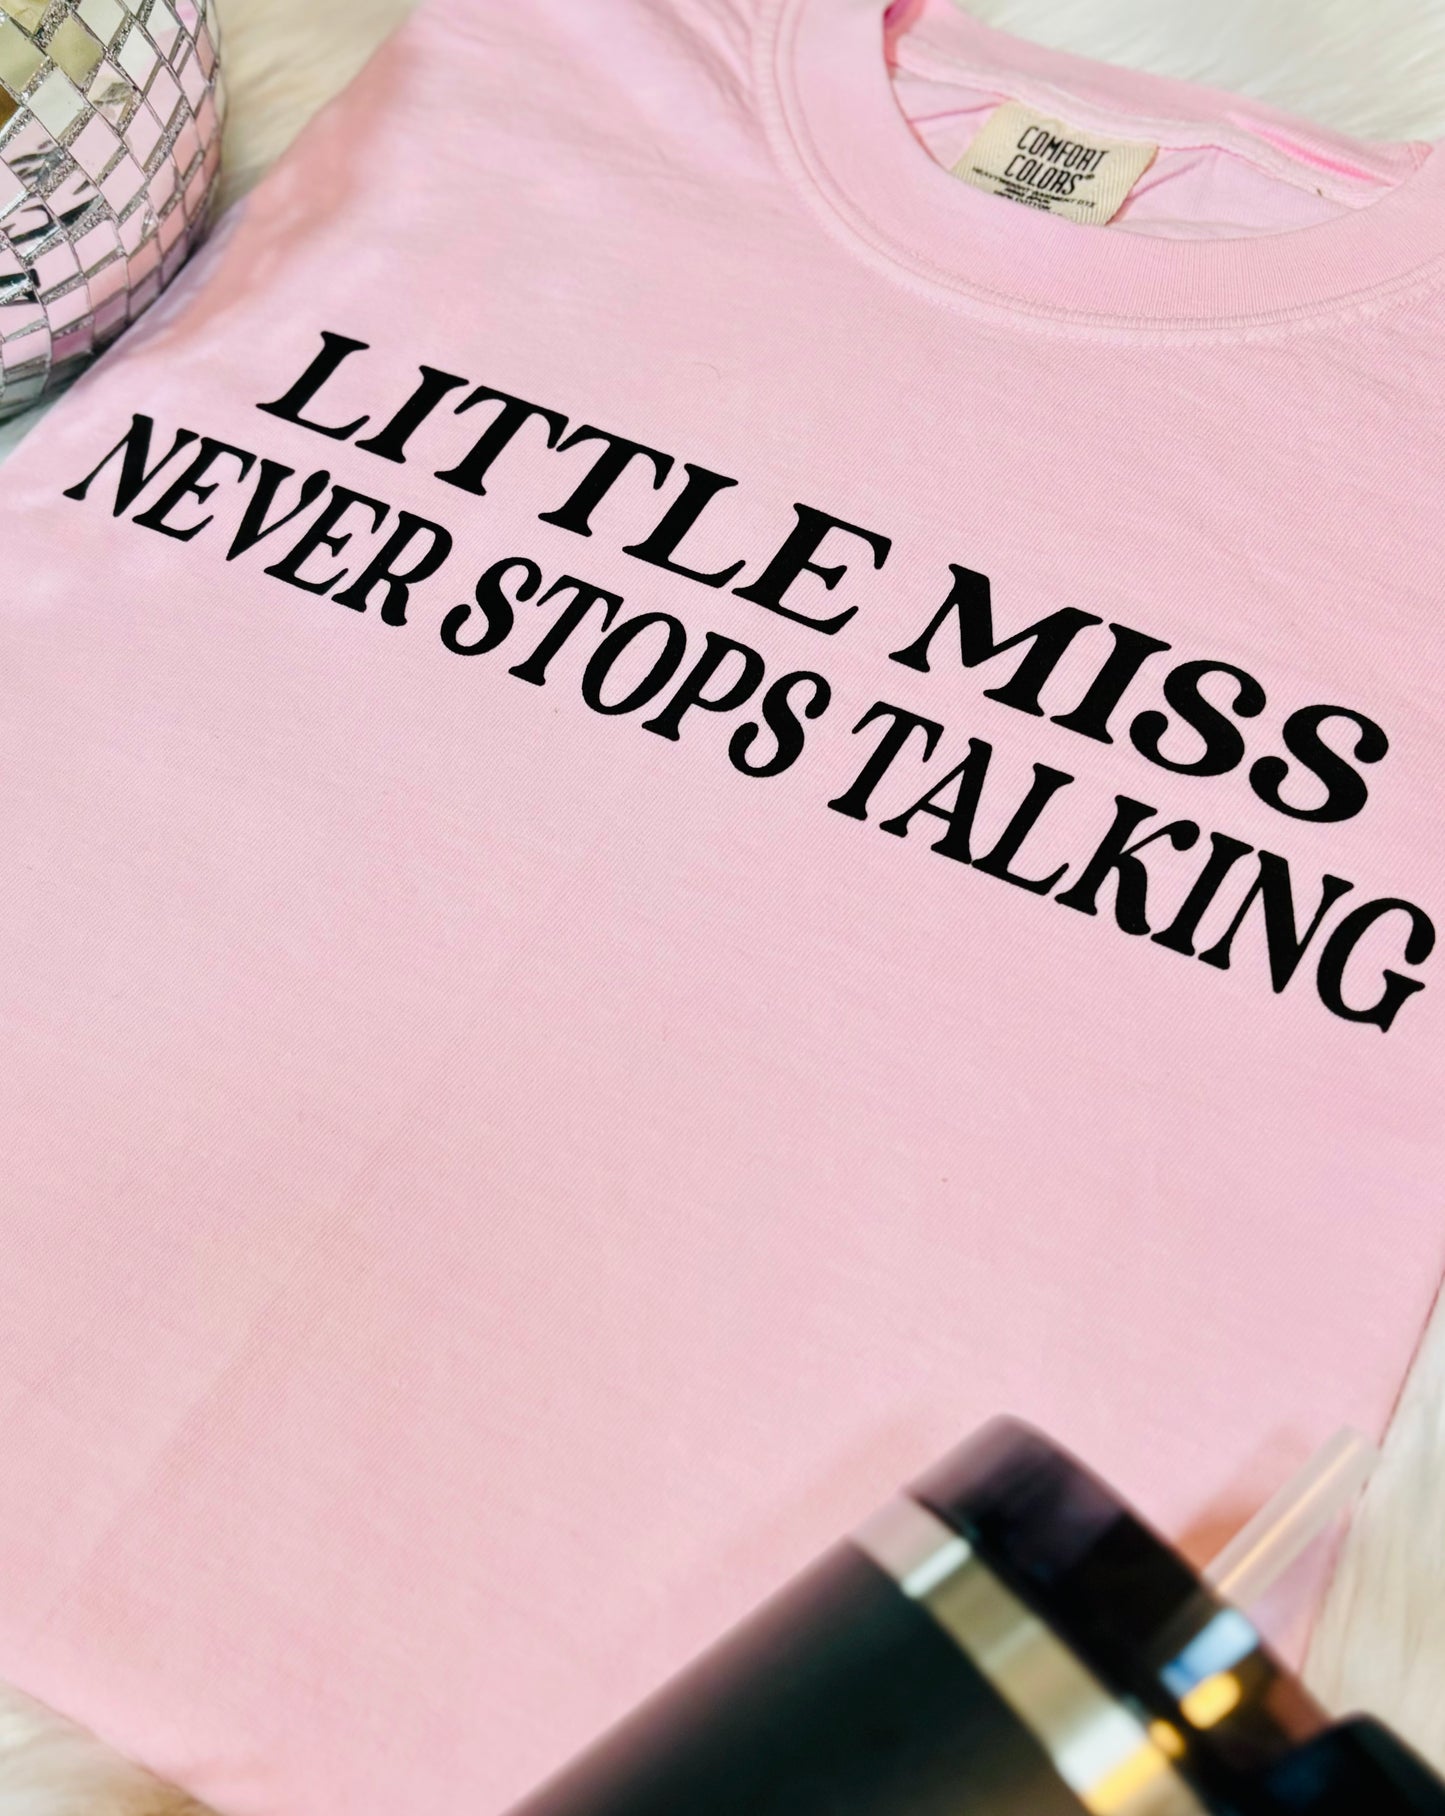 Little Miss Never Stops Talking